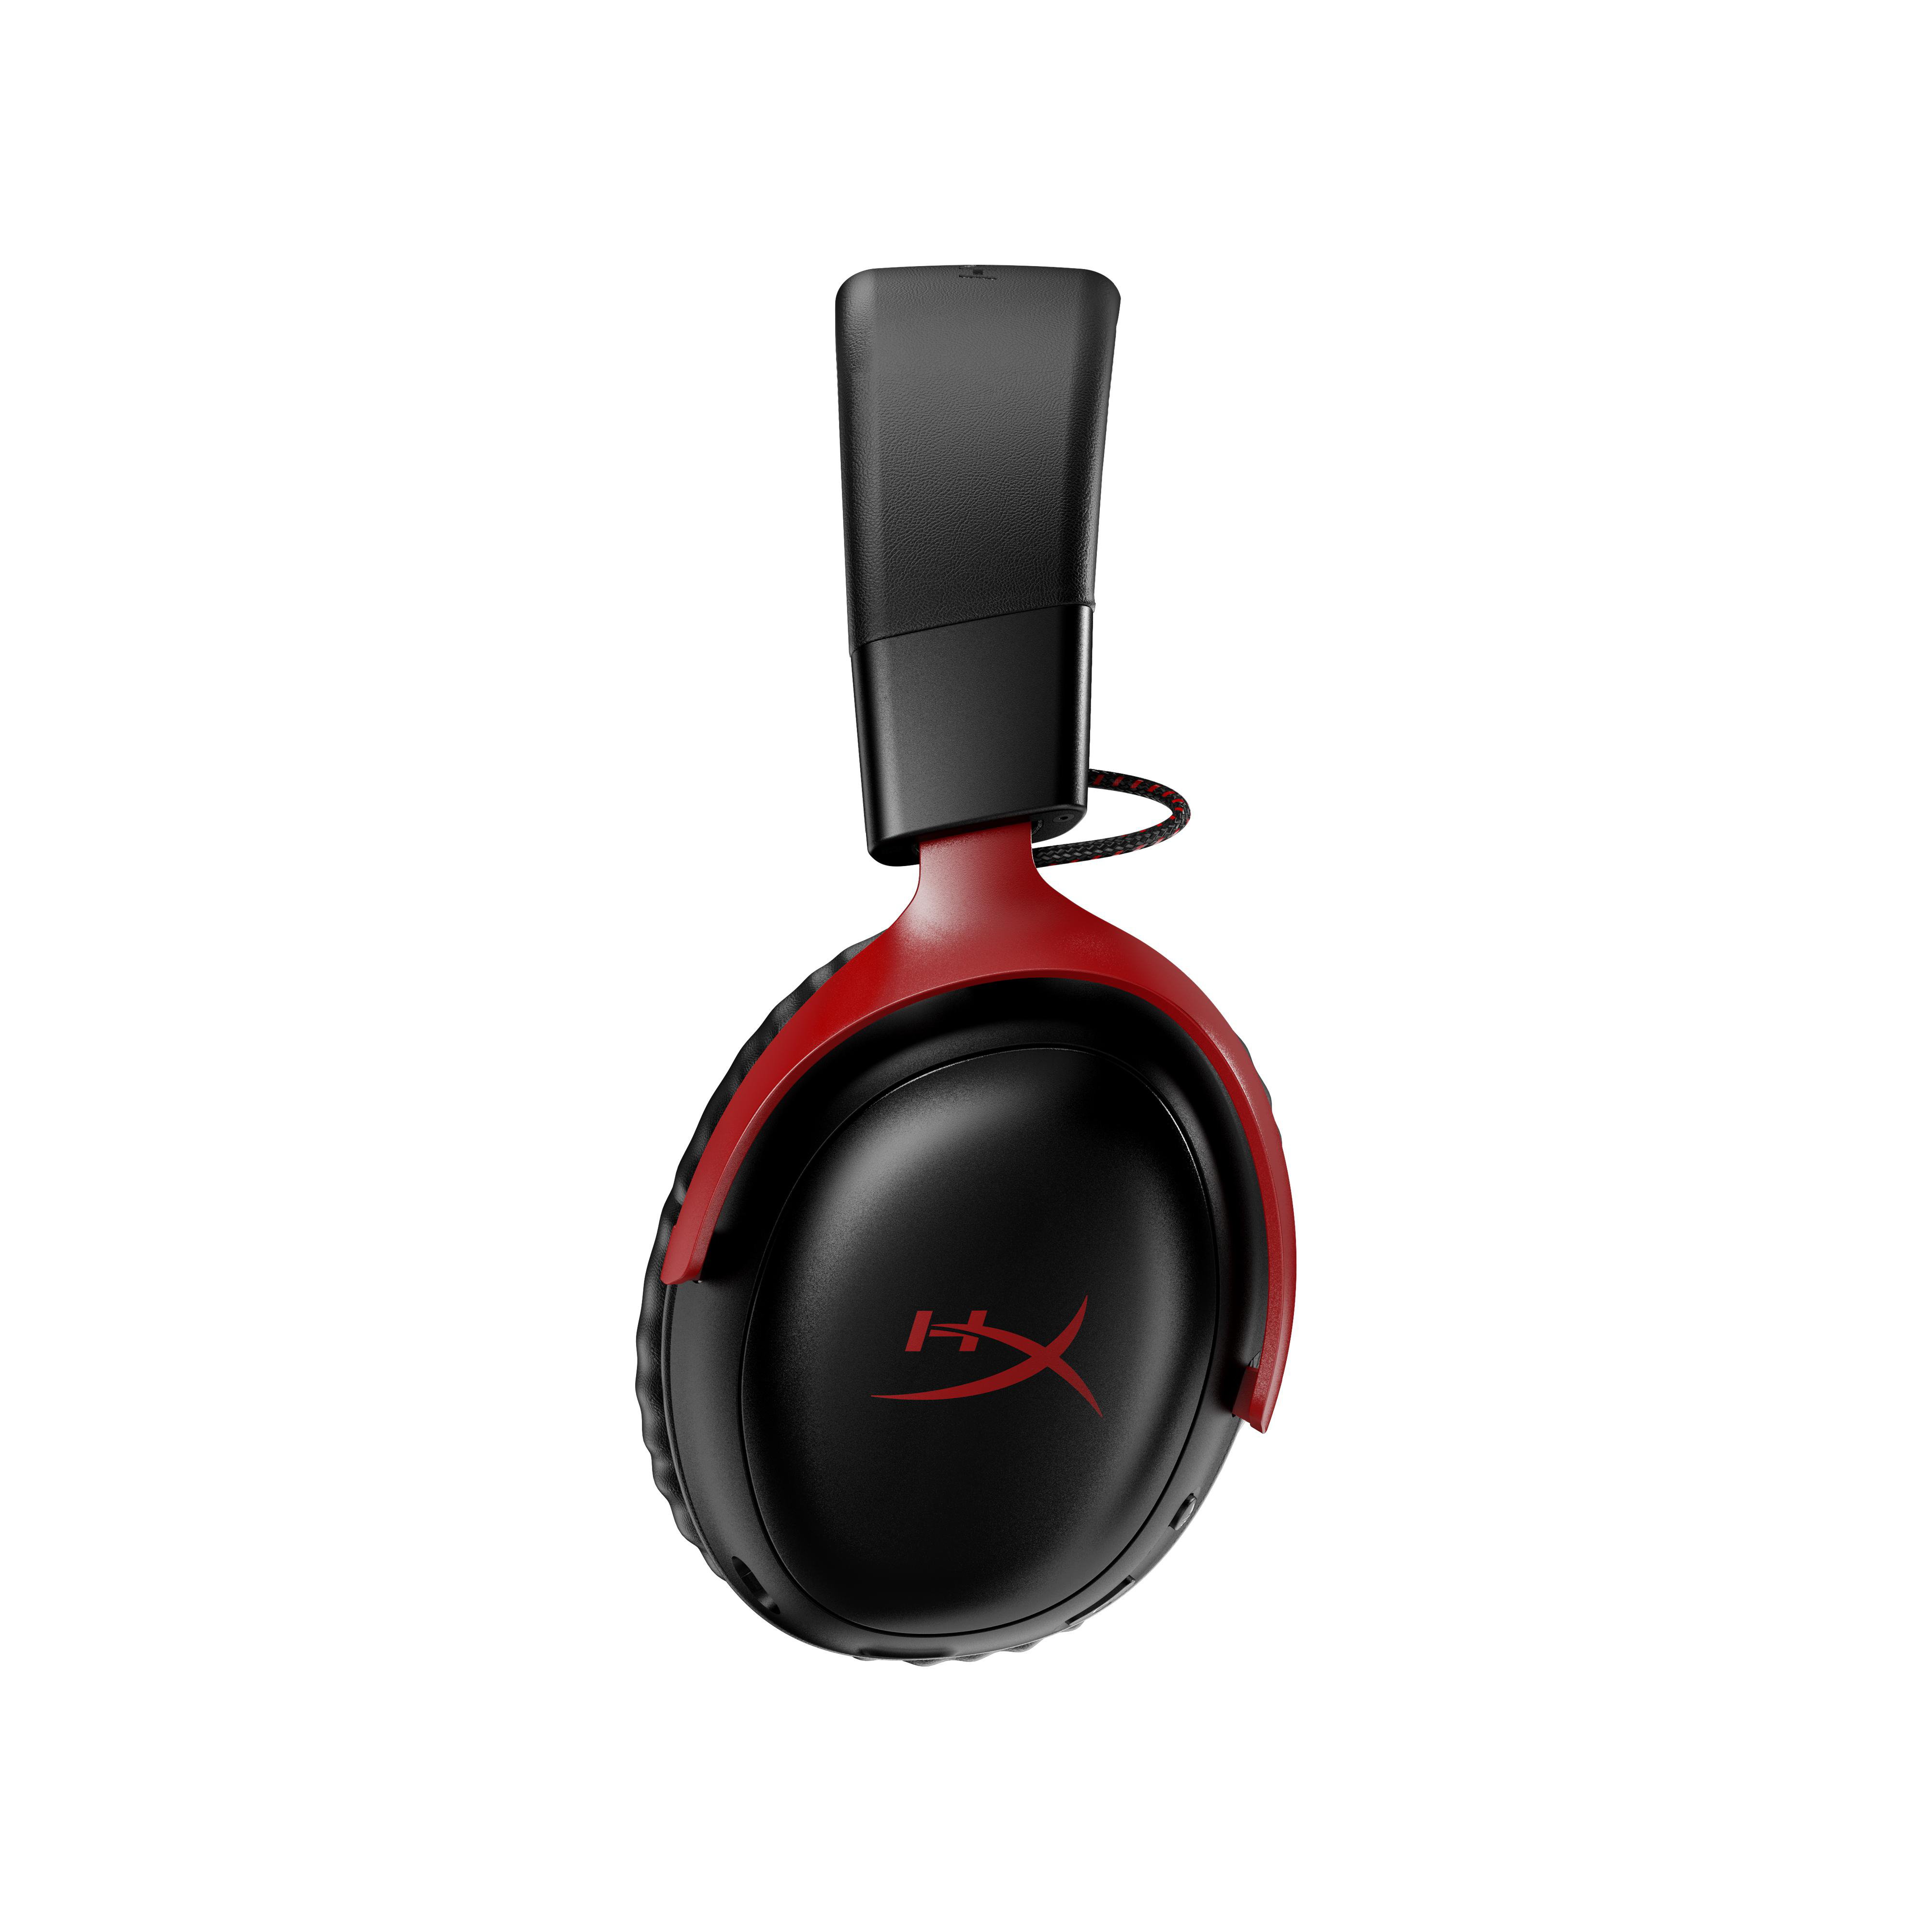 Headset Over-ear Wireless, Cloud HYPERX Black/Red III Gaming